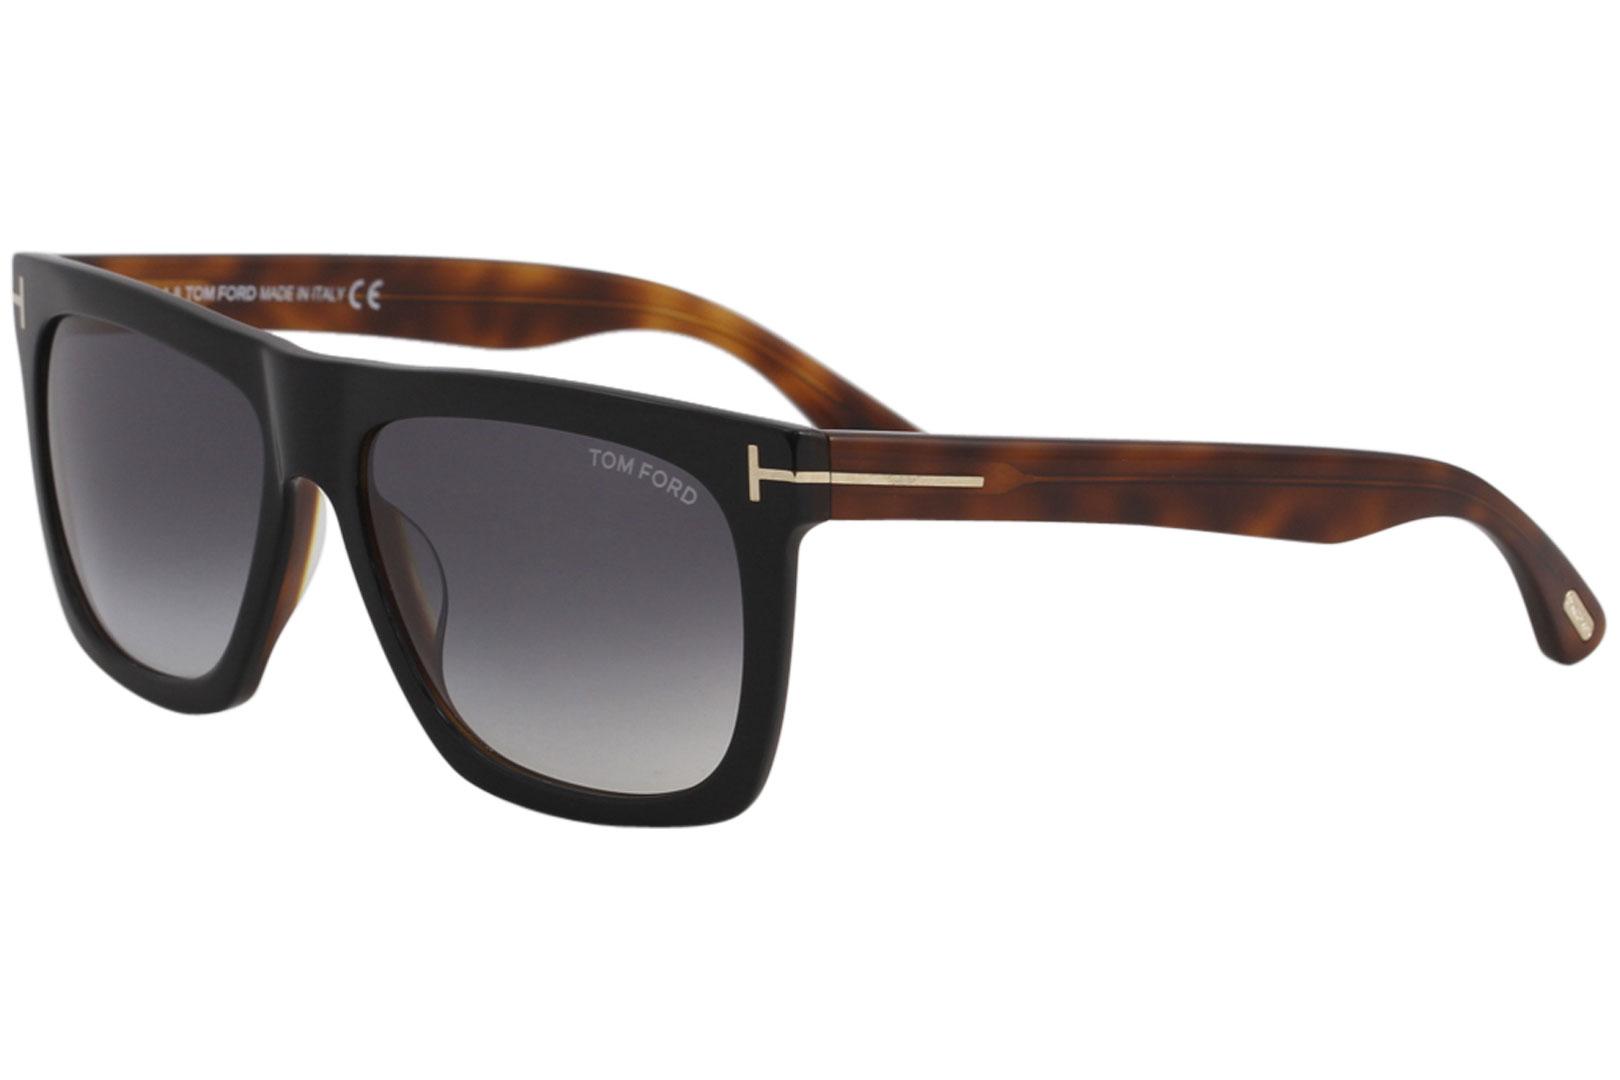 Tom Ford Sunglasses Women's Morgan TF513 01W Black/Blue Gradient 57mm |  